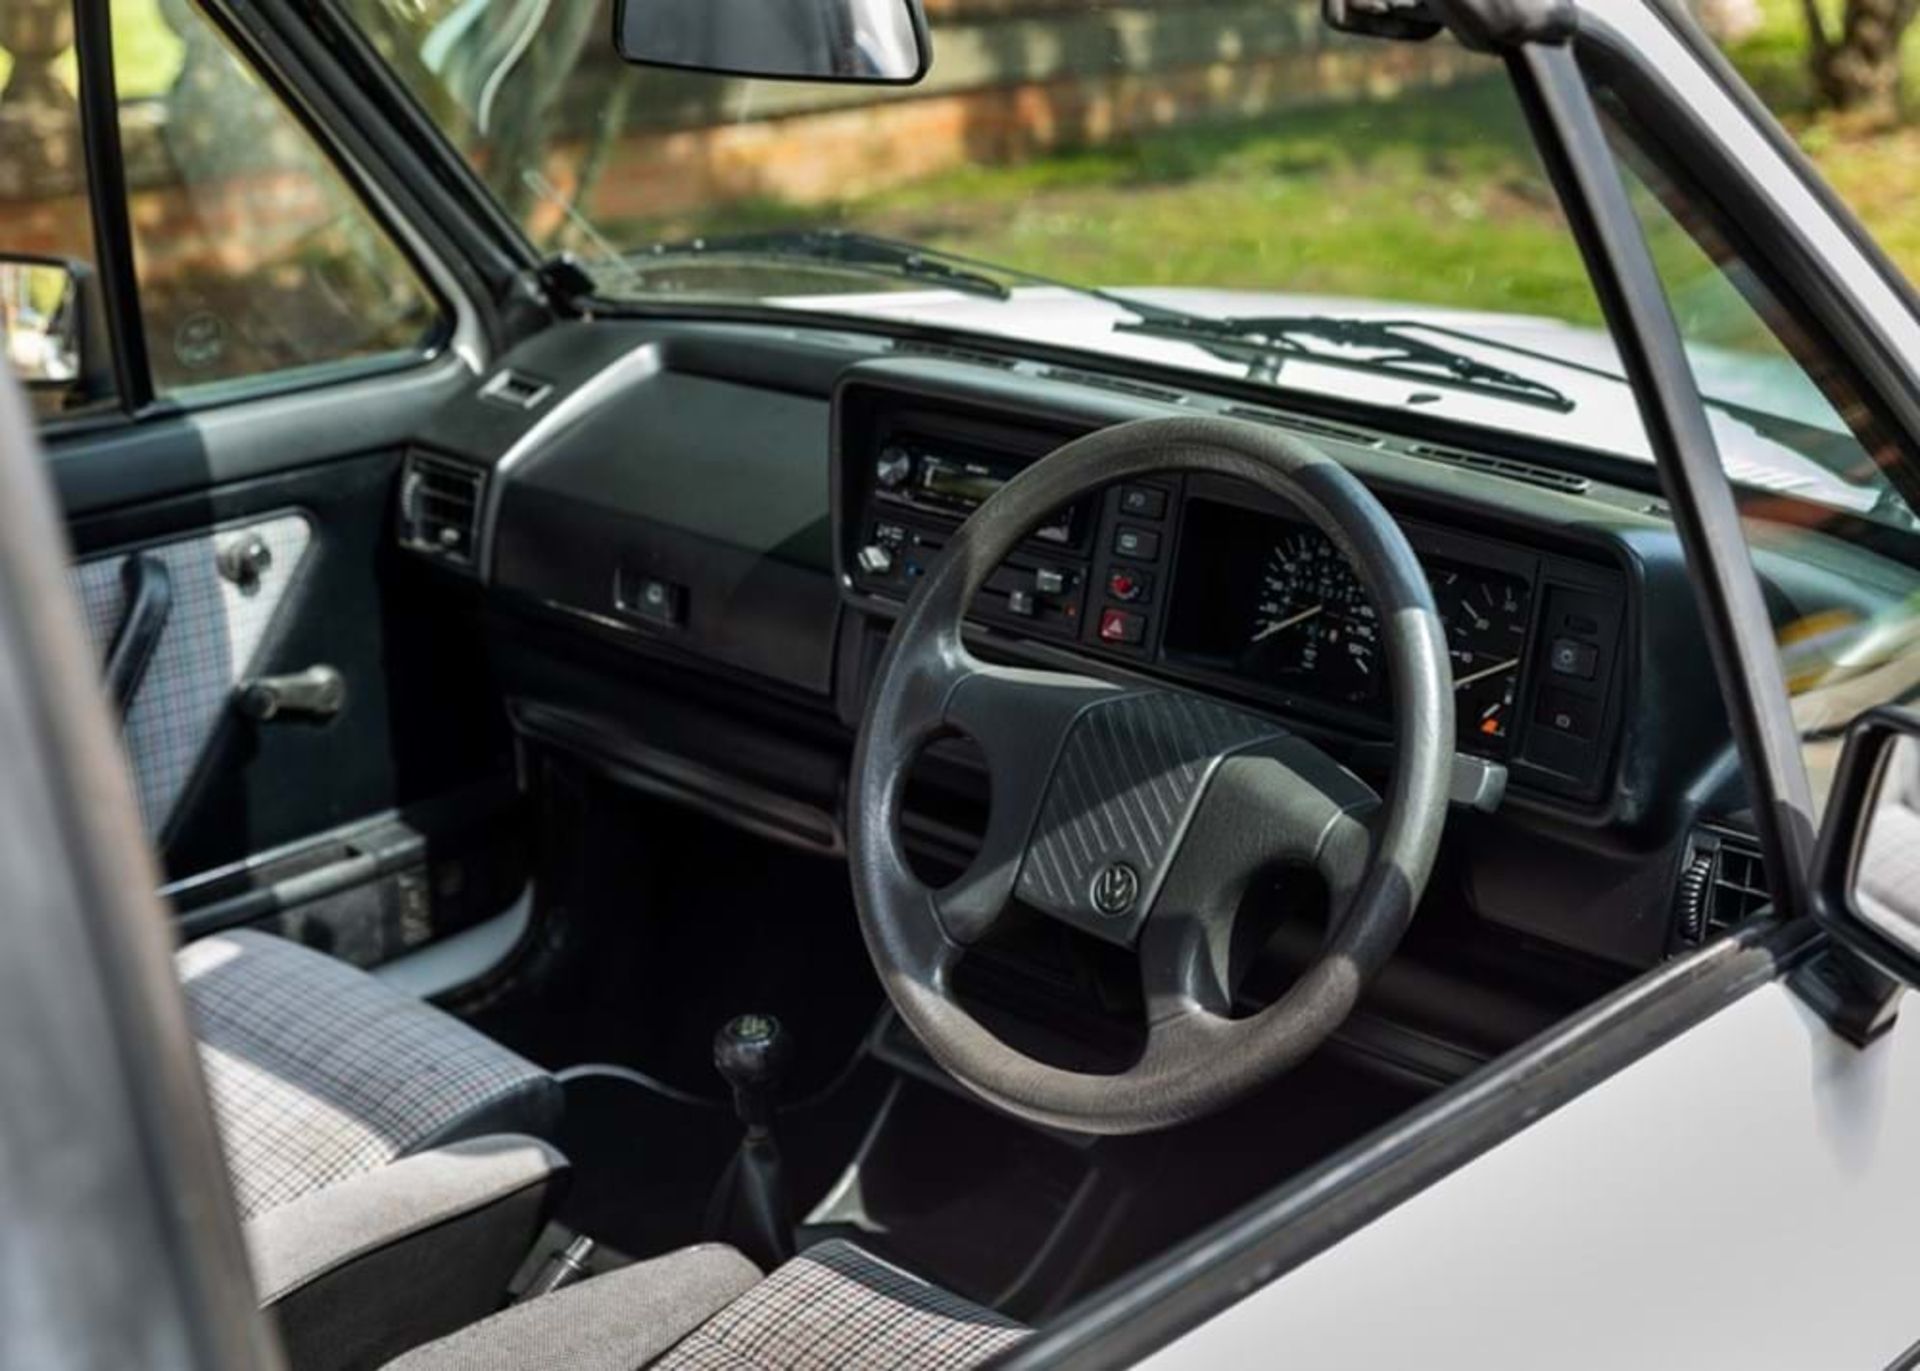 1989 Volkswagen Golf Mk. I Clipper Cabriolet - Image 9 of 10